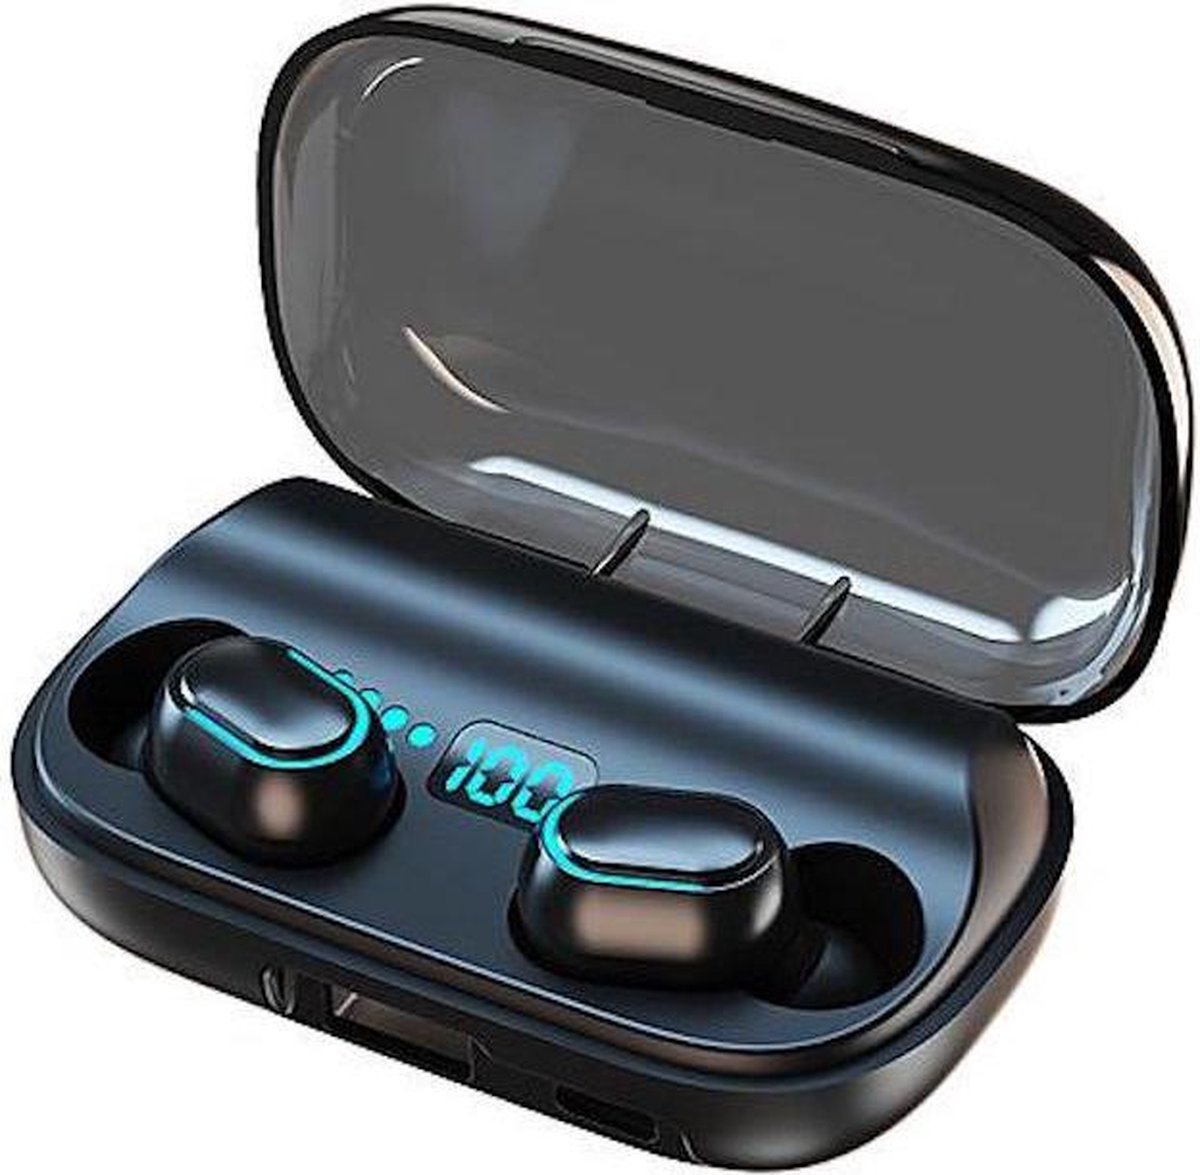 TWS - Draadloze oortjes / in-ear oordopjes - Bluetooth Draadloze buds - Luxe indicator - Zwart